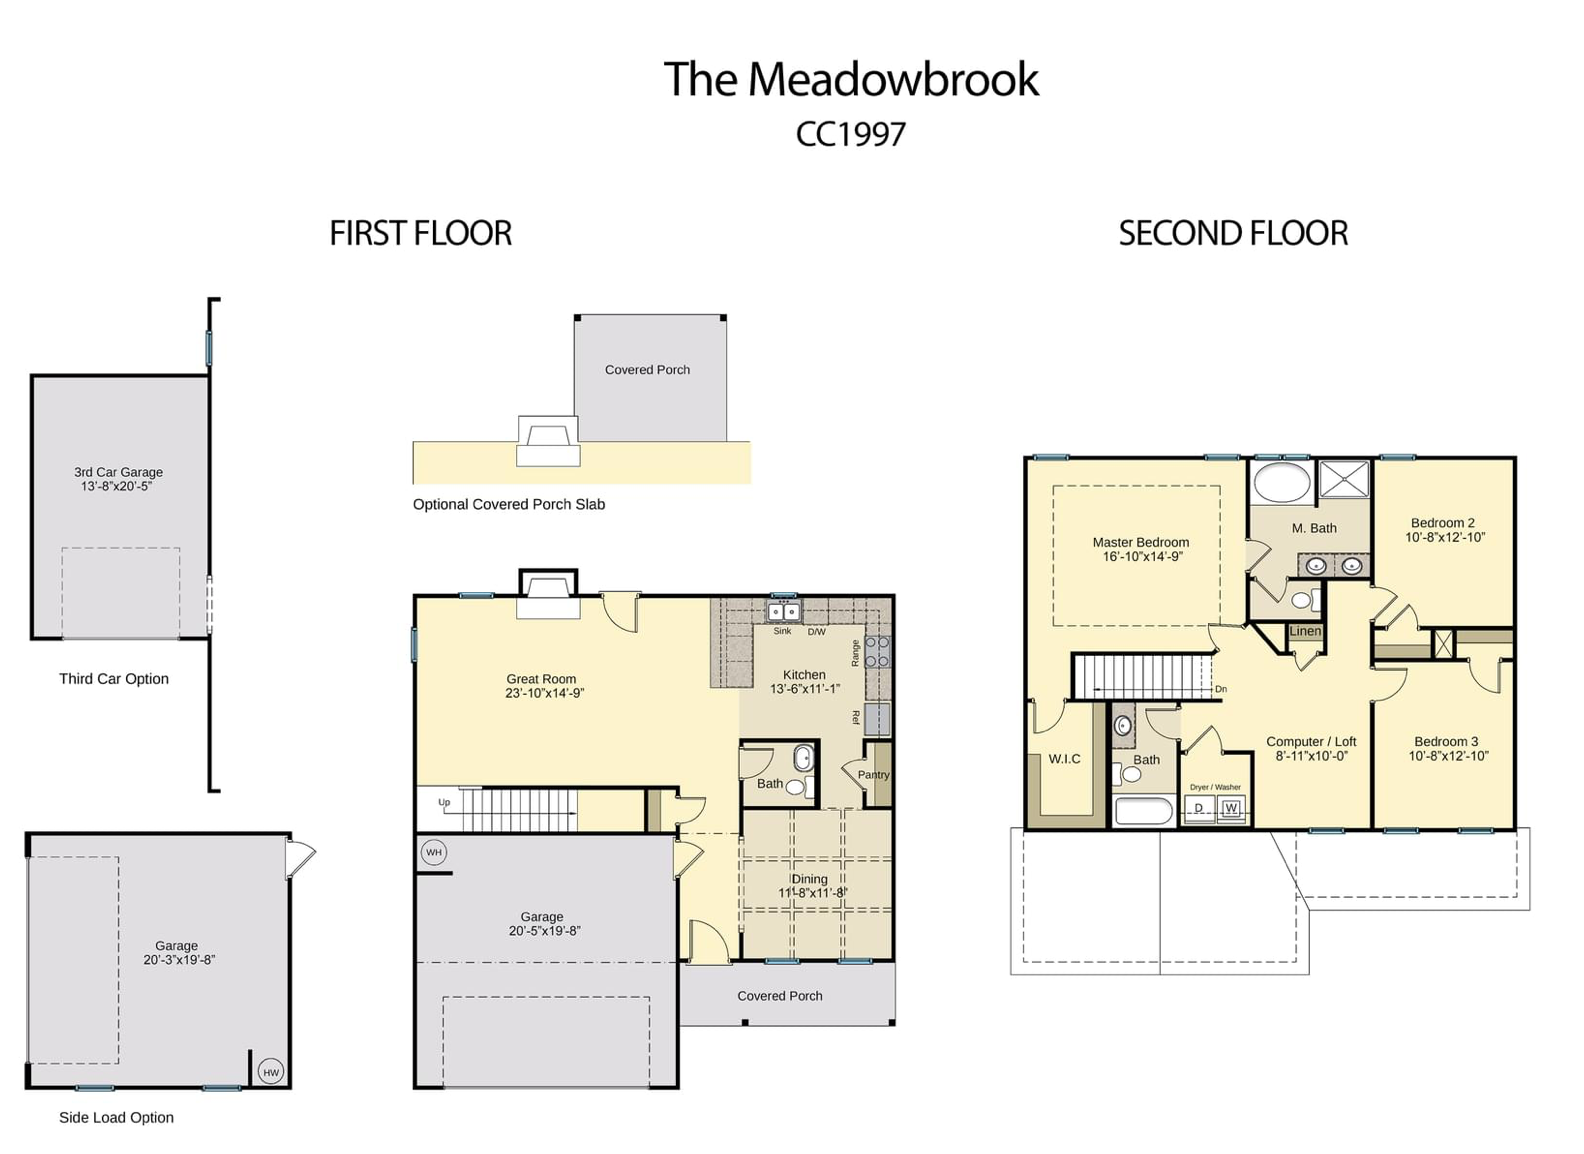 The Meadowbrook floor plan image